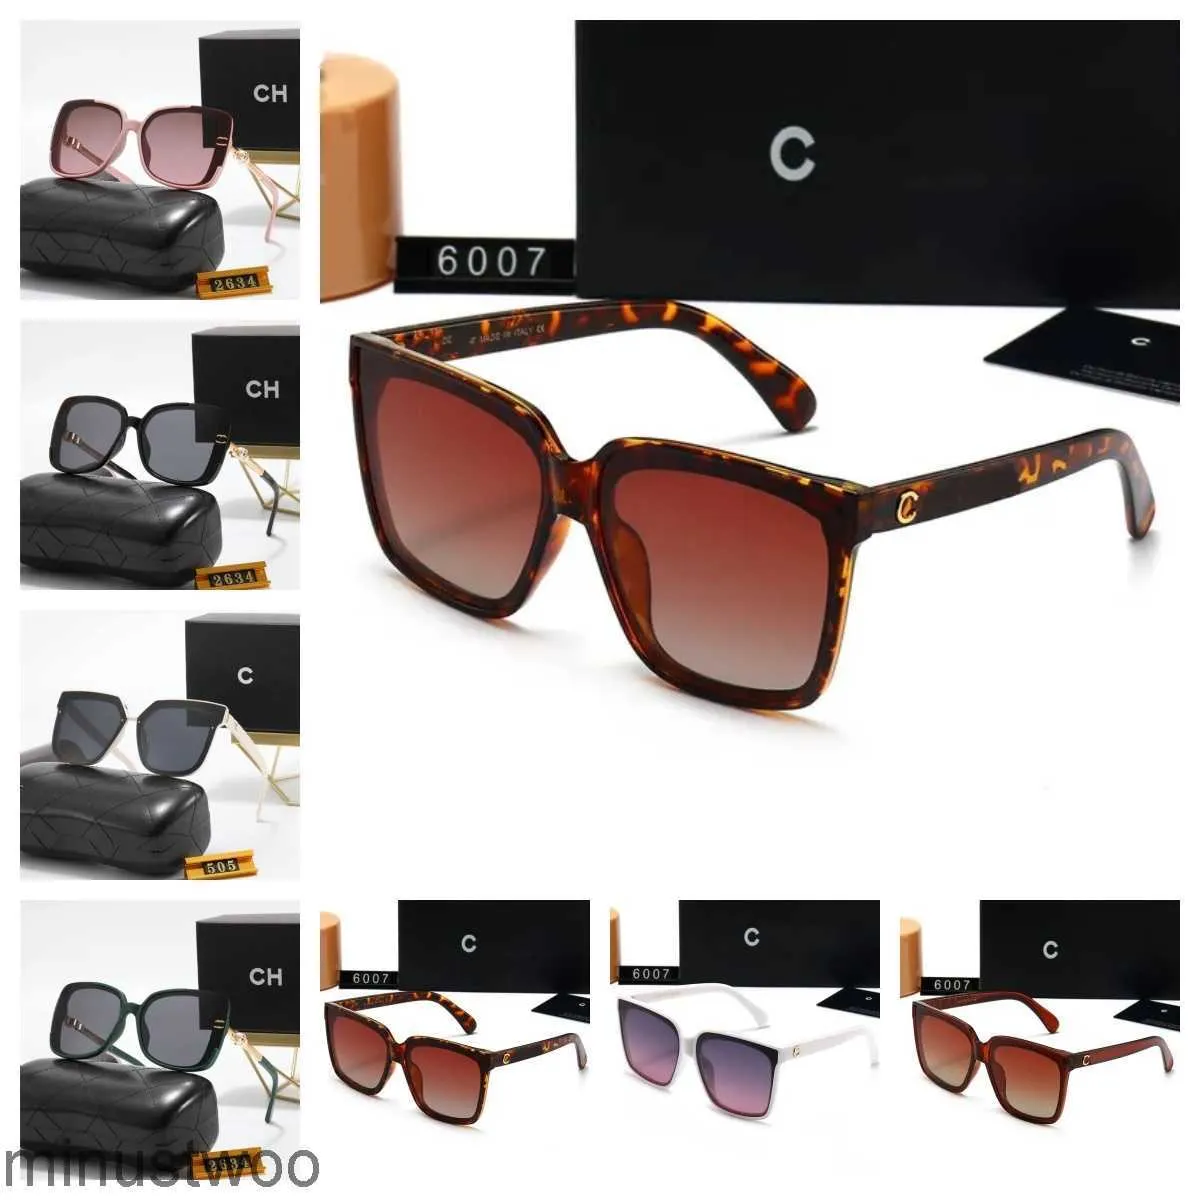 Dames ch zonnebrillen ontwerper mannen ovale zonnebrillen klassieke letterontwerp debutante stijl stijlvolle zonnebril vierkante bril frame uv4 nrik